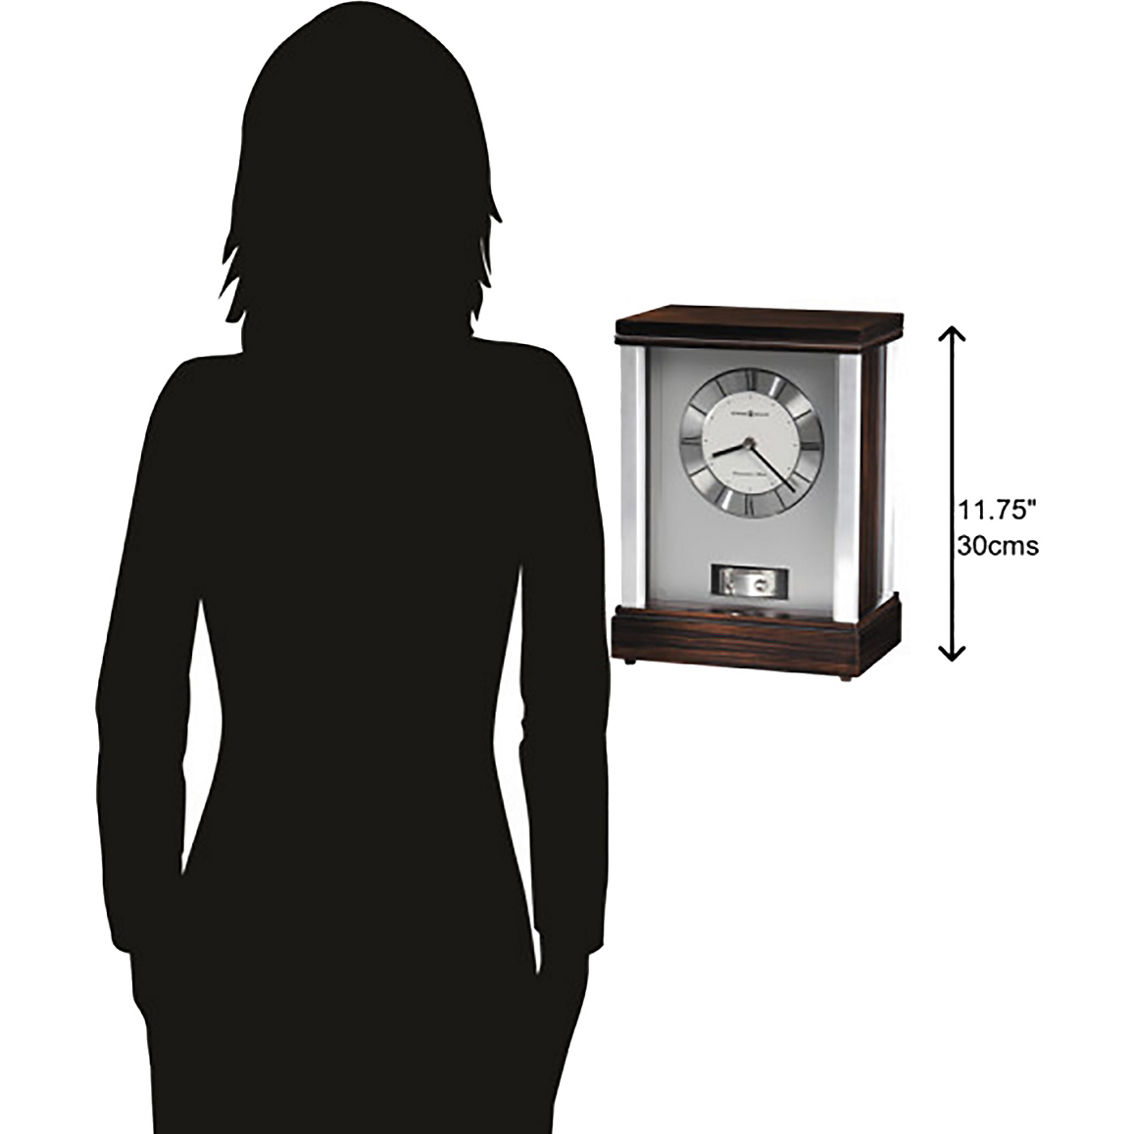 Howard Miller Gardner Mantel Clock - Image 2 of 2